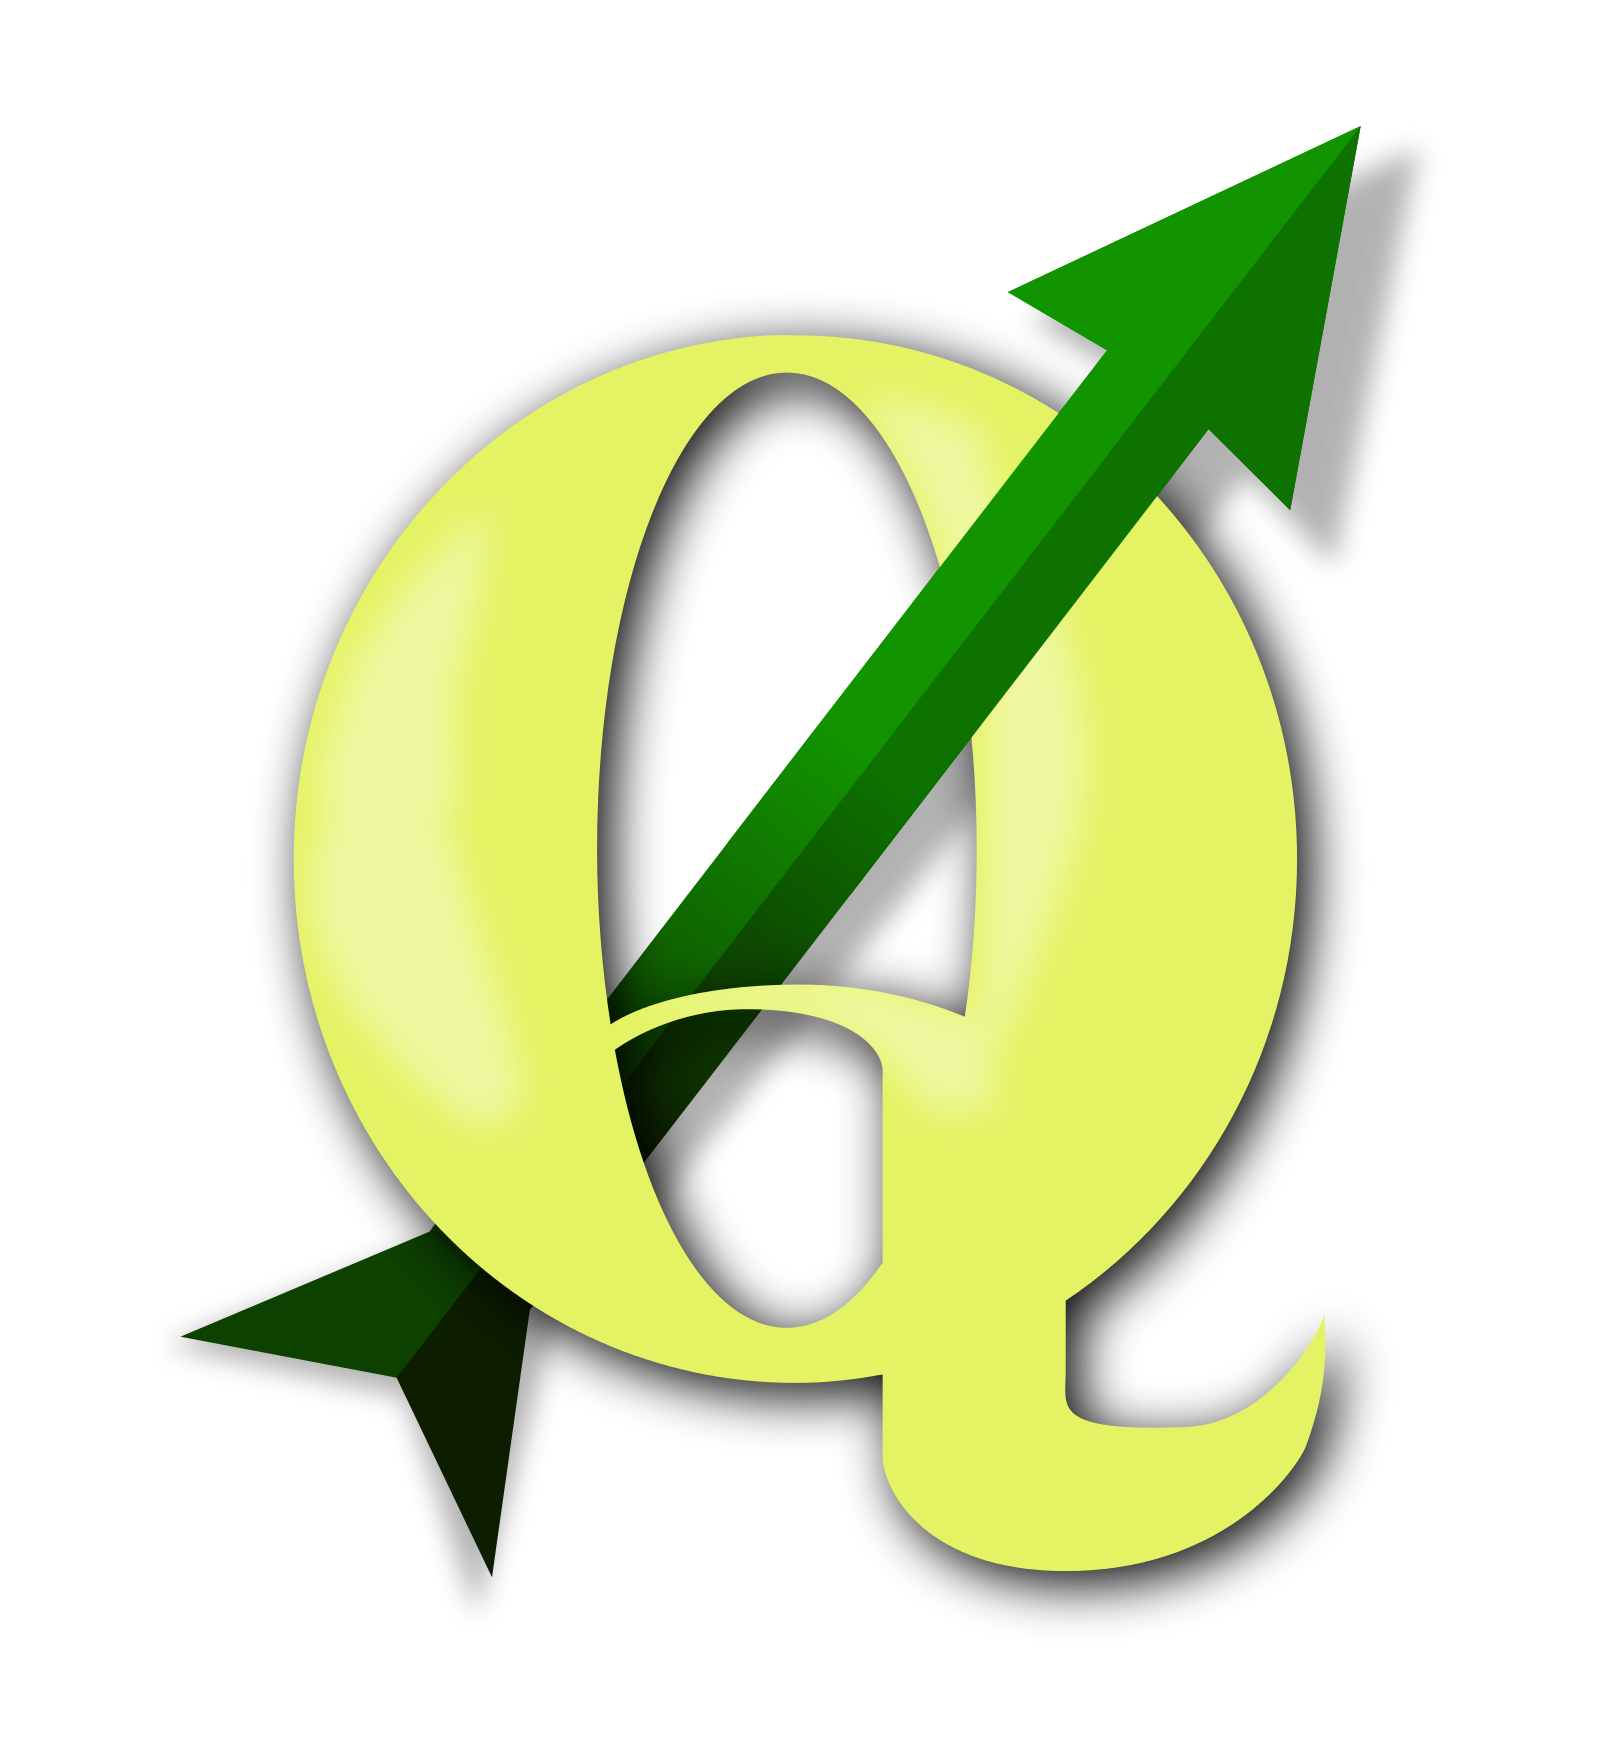 Logo of QGIS software